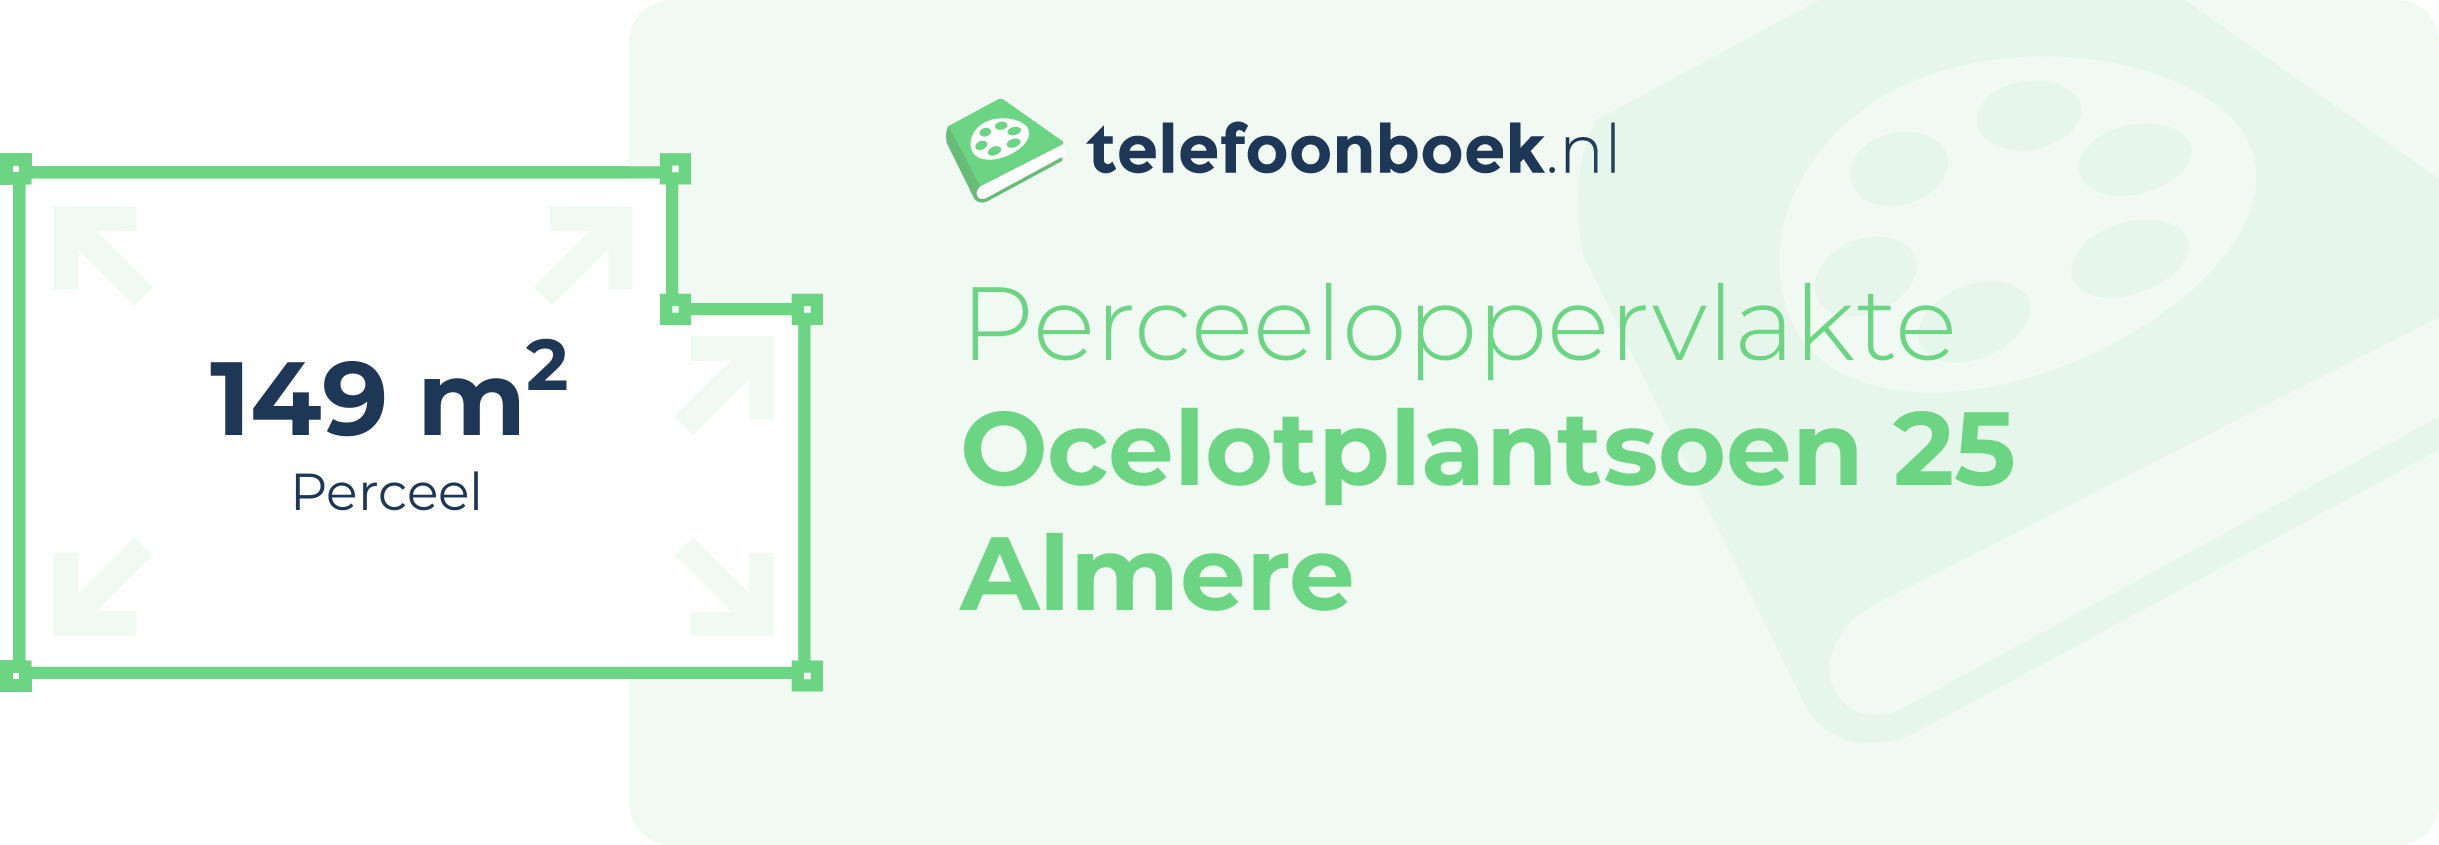 Perceeloppervlakte Ocelotplantsoen 25 Almere